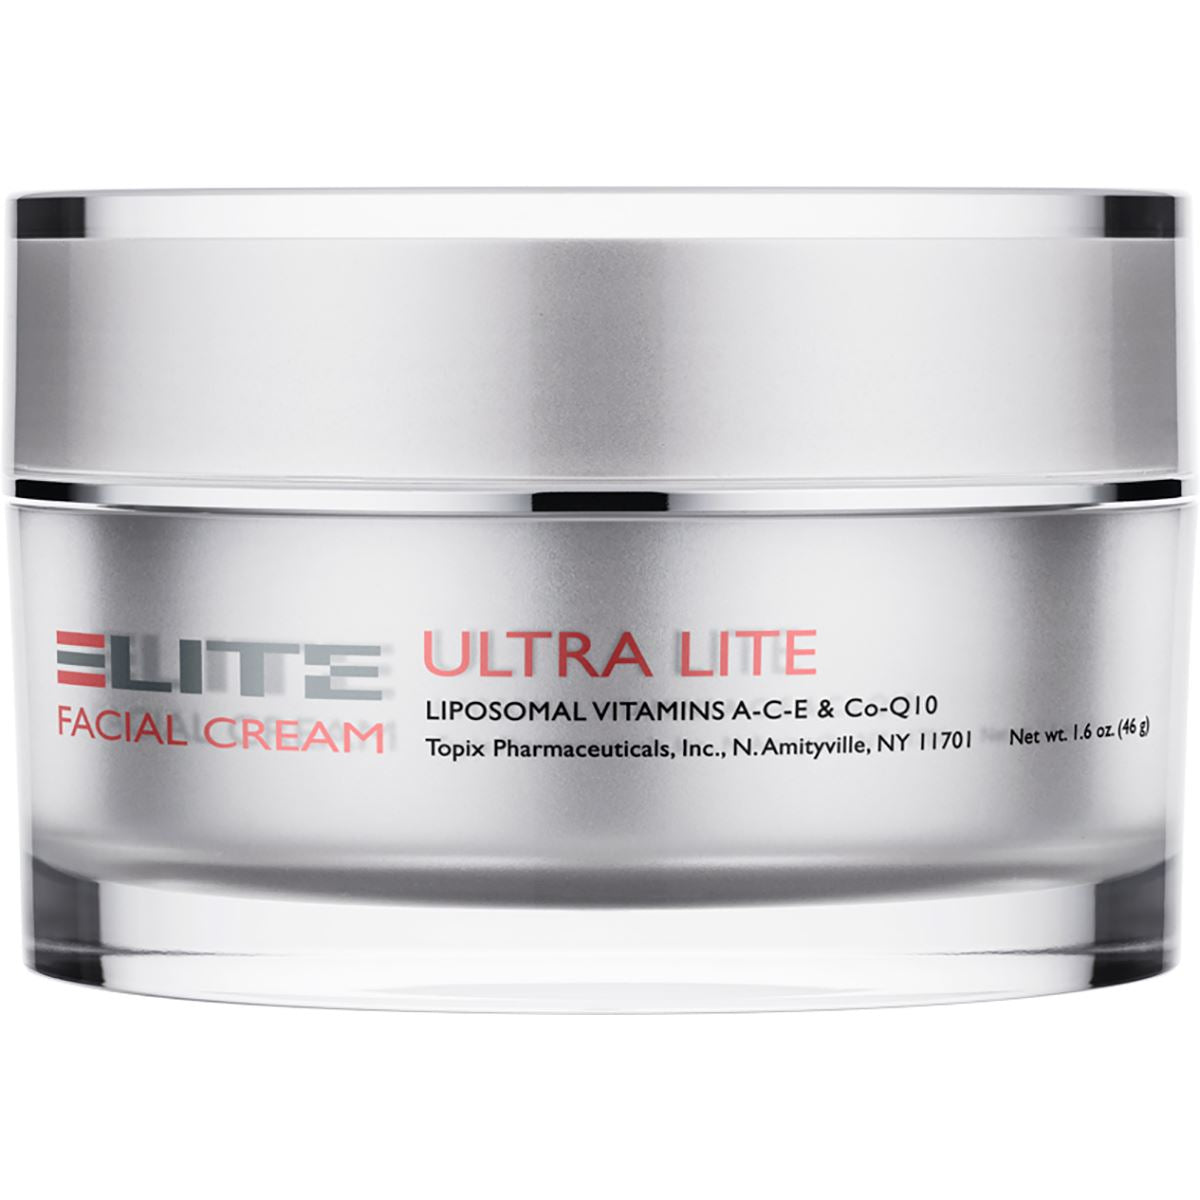 Glycolix Elite Facial Cream Ultra Lite Glycolix Elite 1.6 fl. oz. Shop at Exclusive Beauty Club